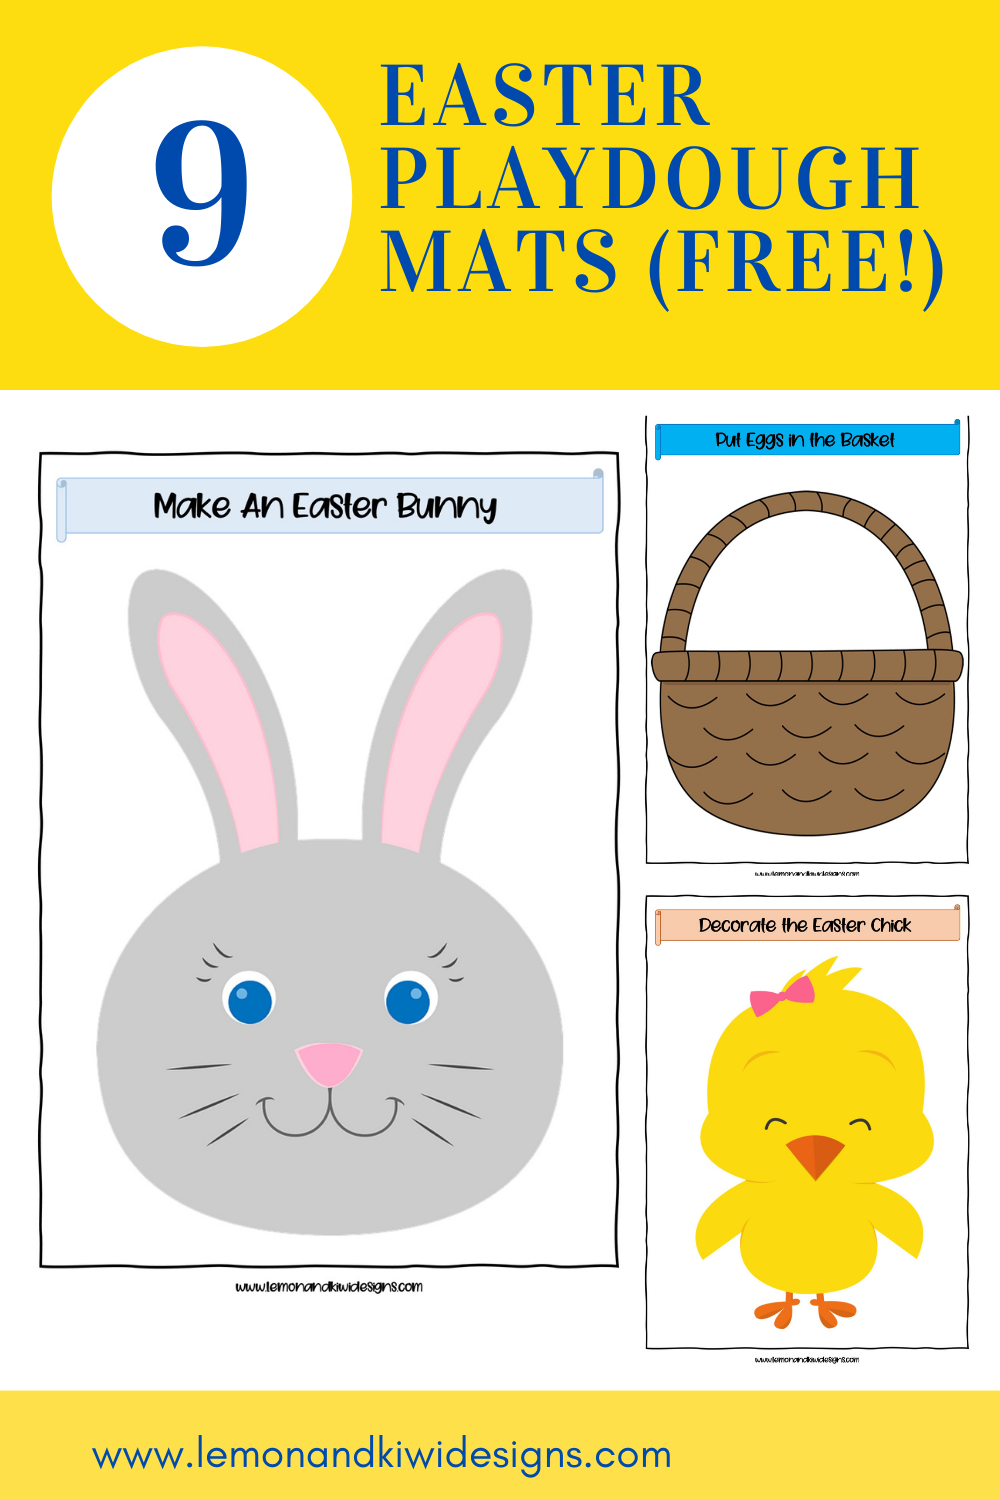 Free Easter Playdough Mats (Printable PDF)